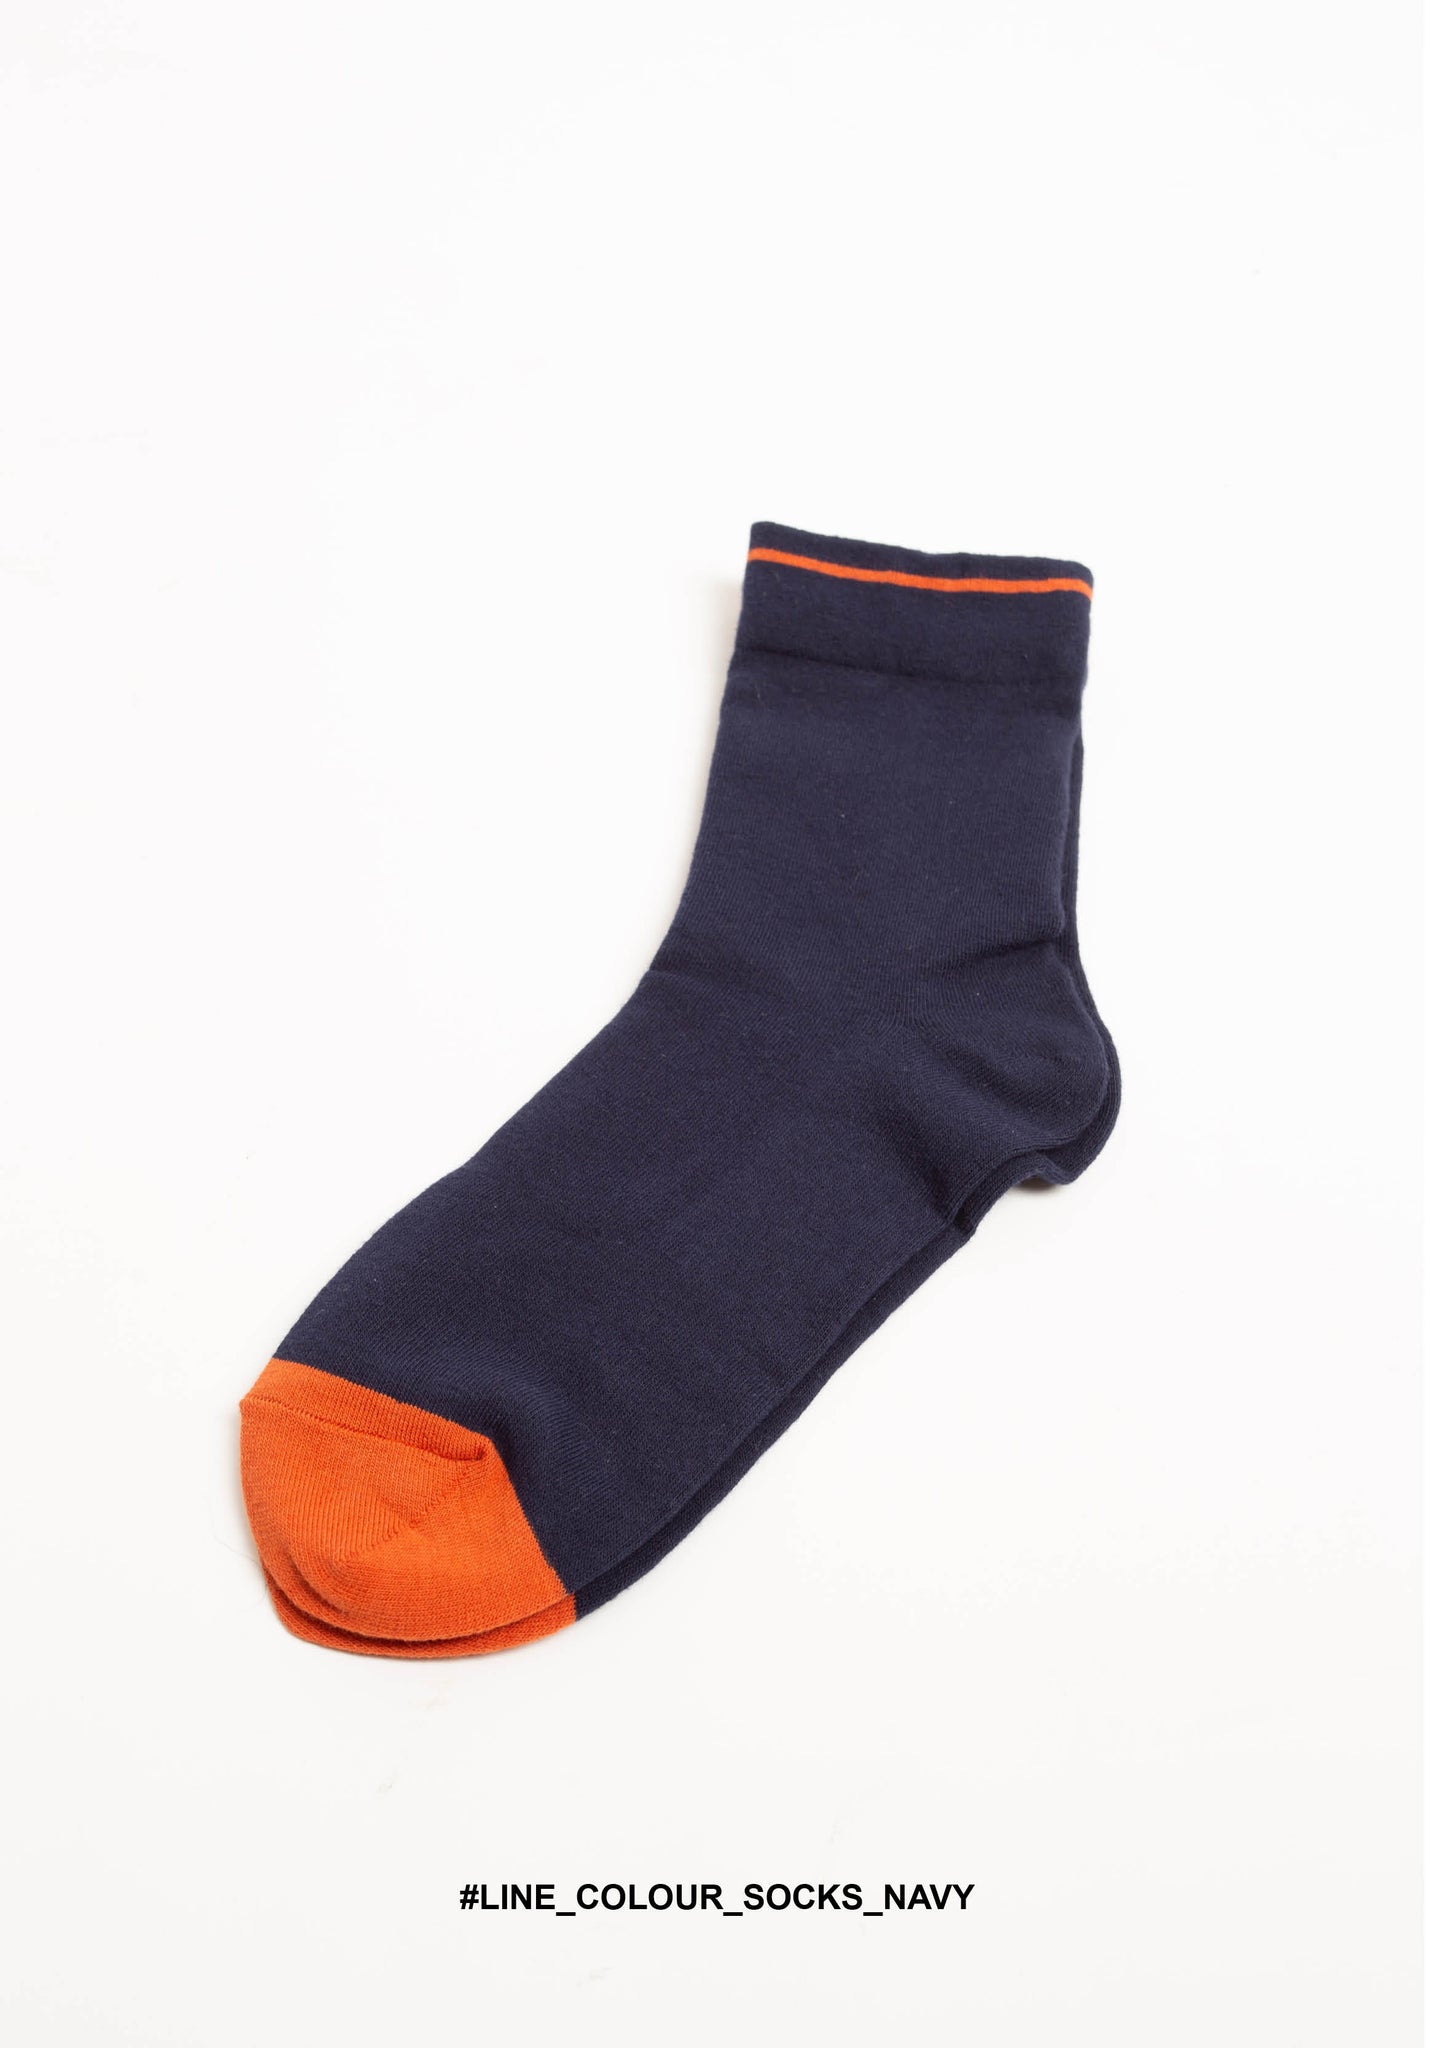 Line Colour Socks Navy - whoami